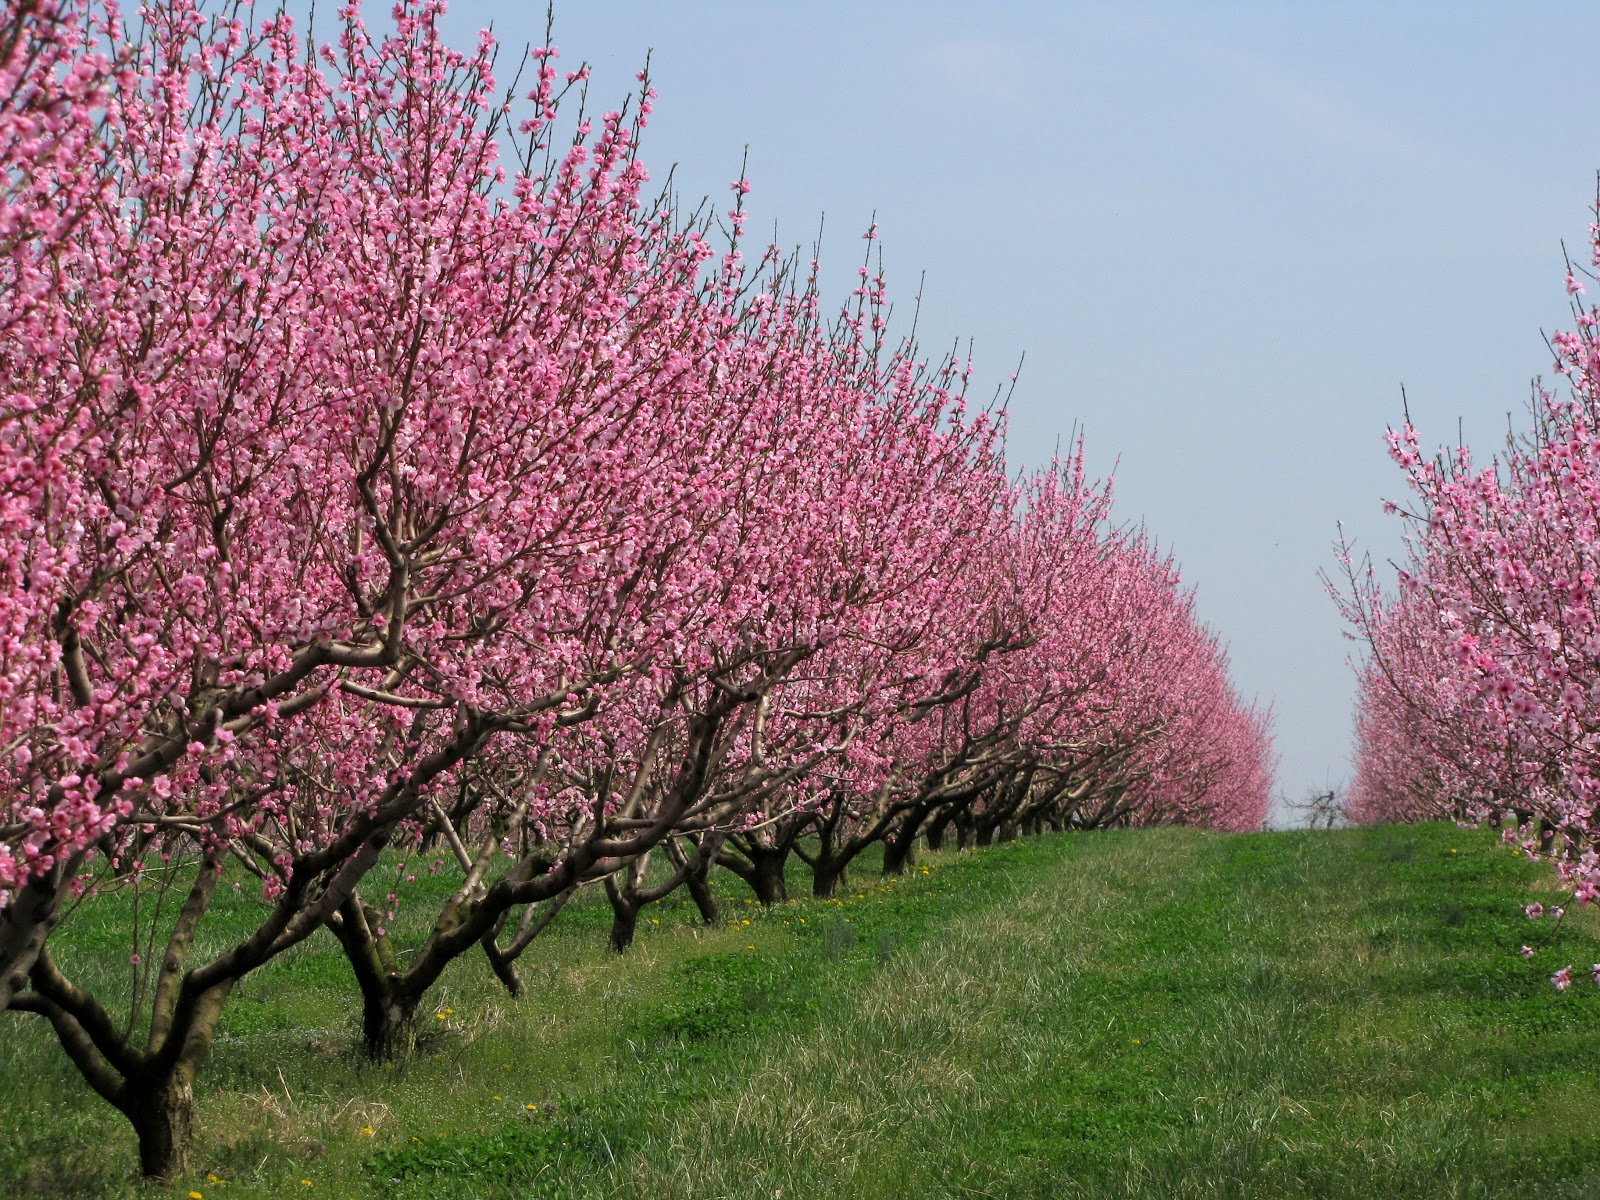 http://3.bp.blogspot.com/-MOXHDf5FaO8/UX2NH3-MQCI/AAAAAAAACLM/iax494T4XuY/s1600/Peach+orchard+blossoms+3.23.12+(3).JPG